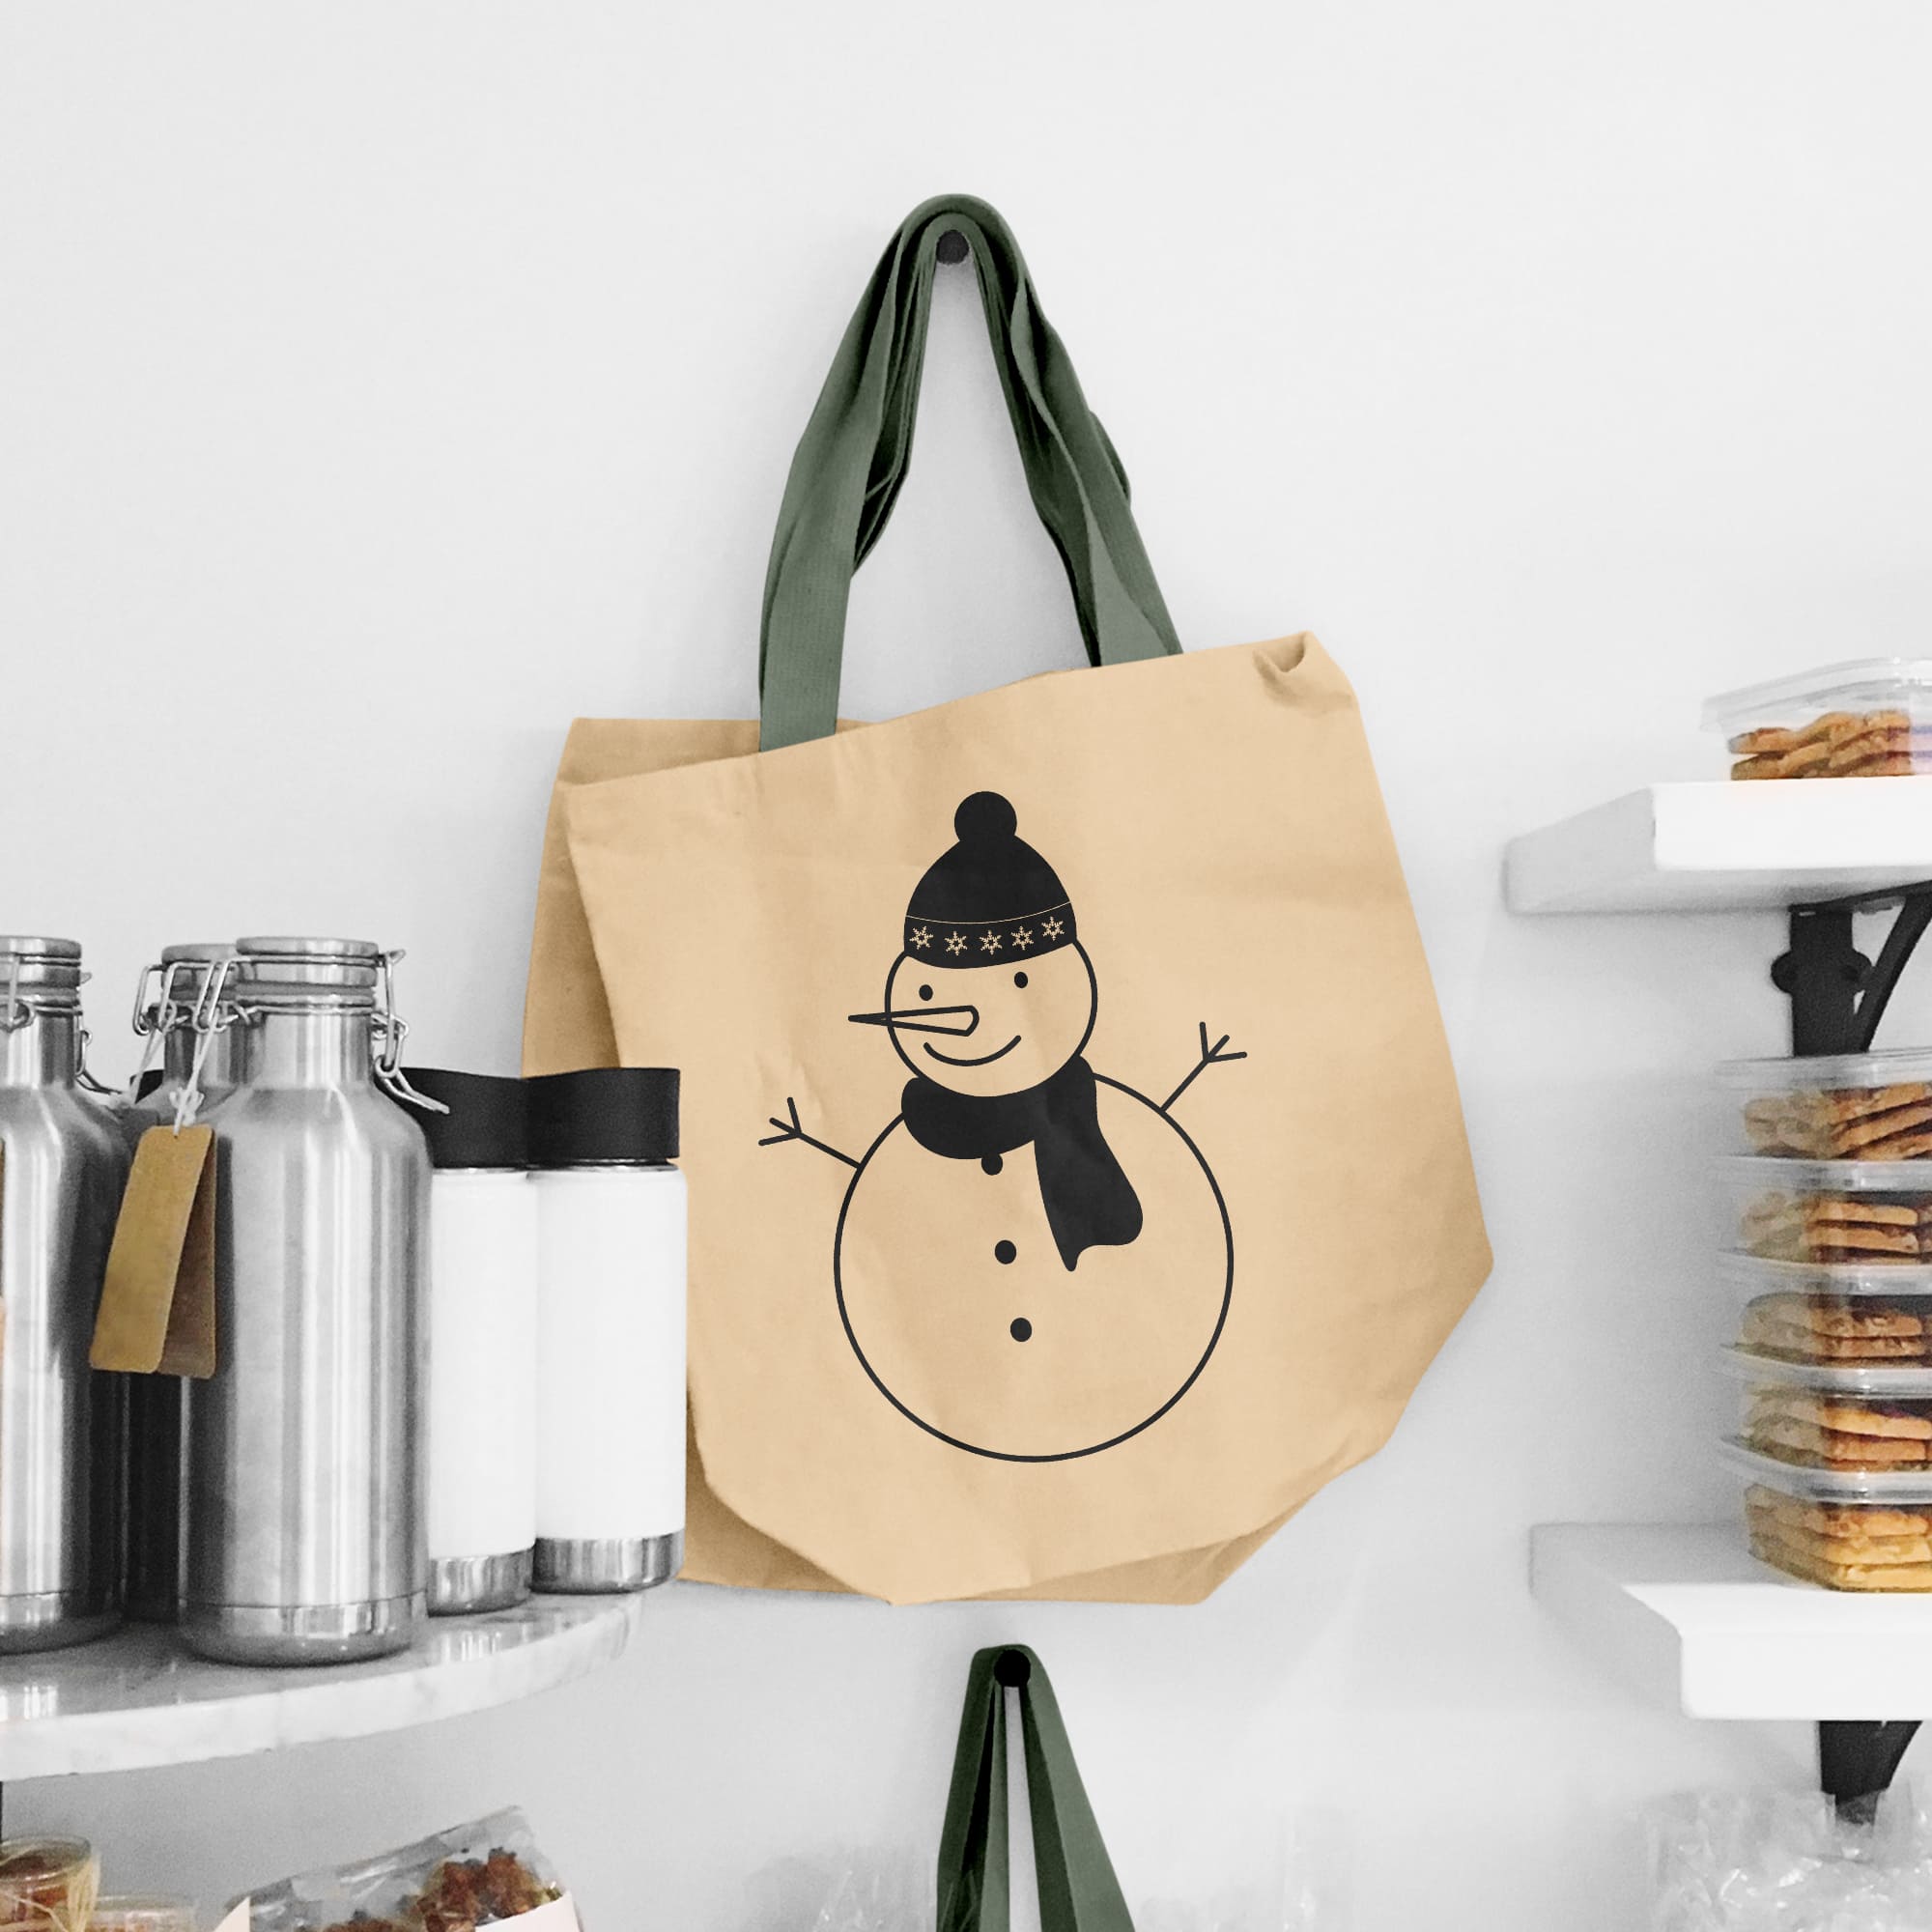 Cute shopping bag with Christmas snowman.